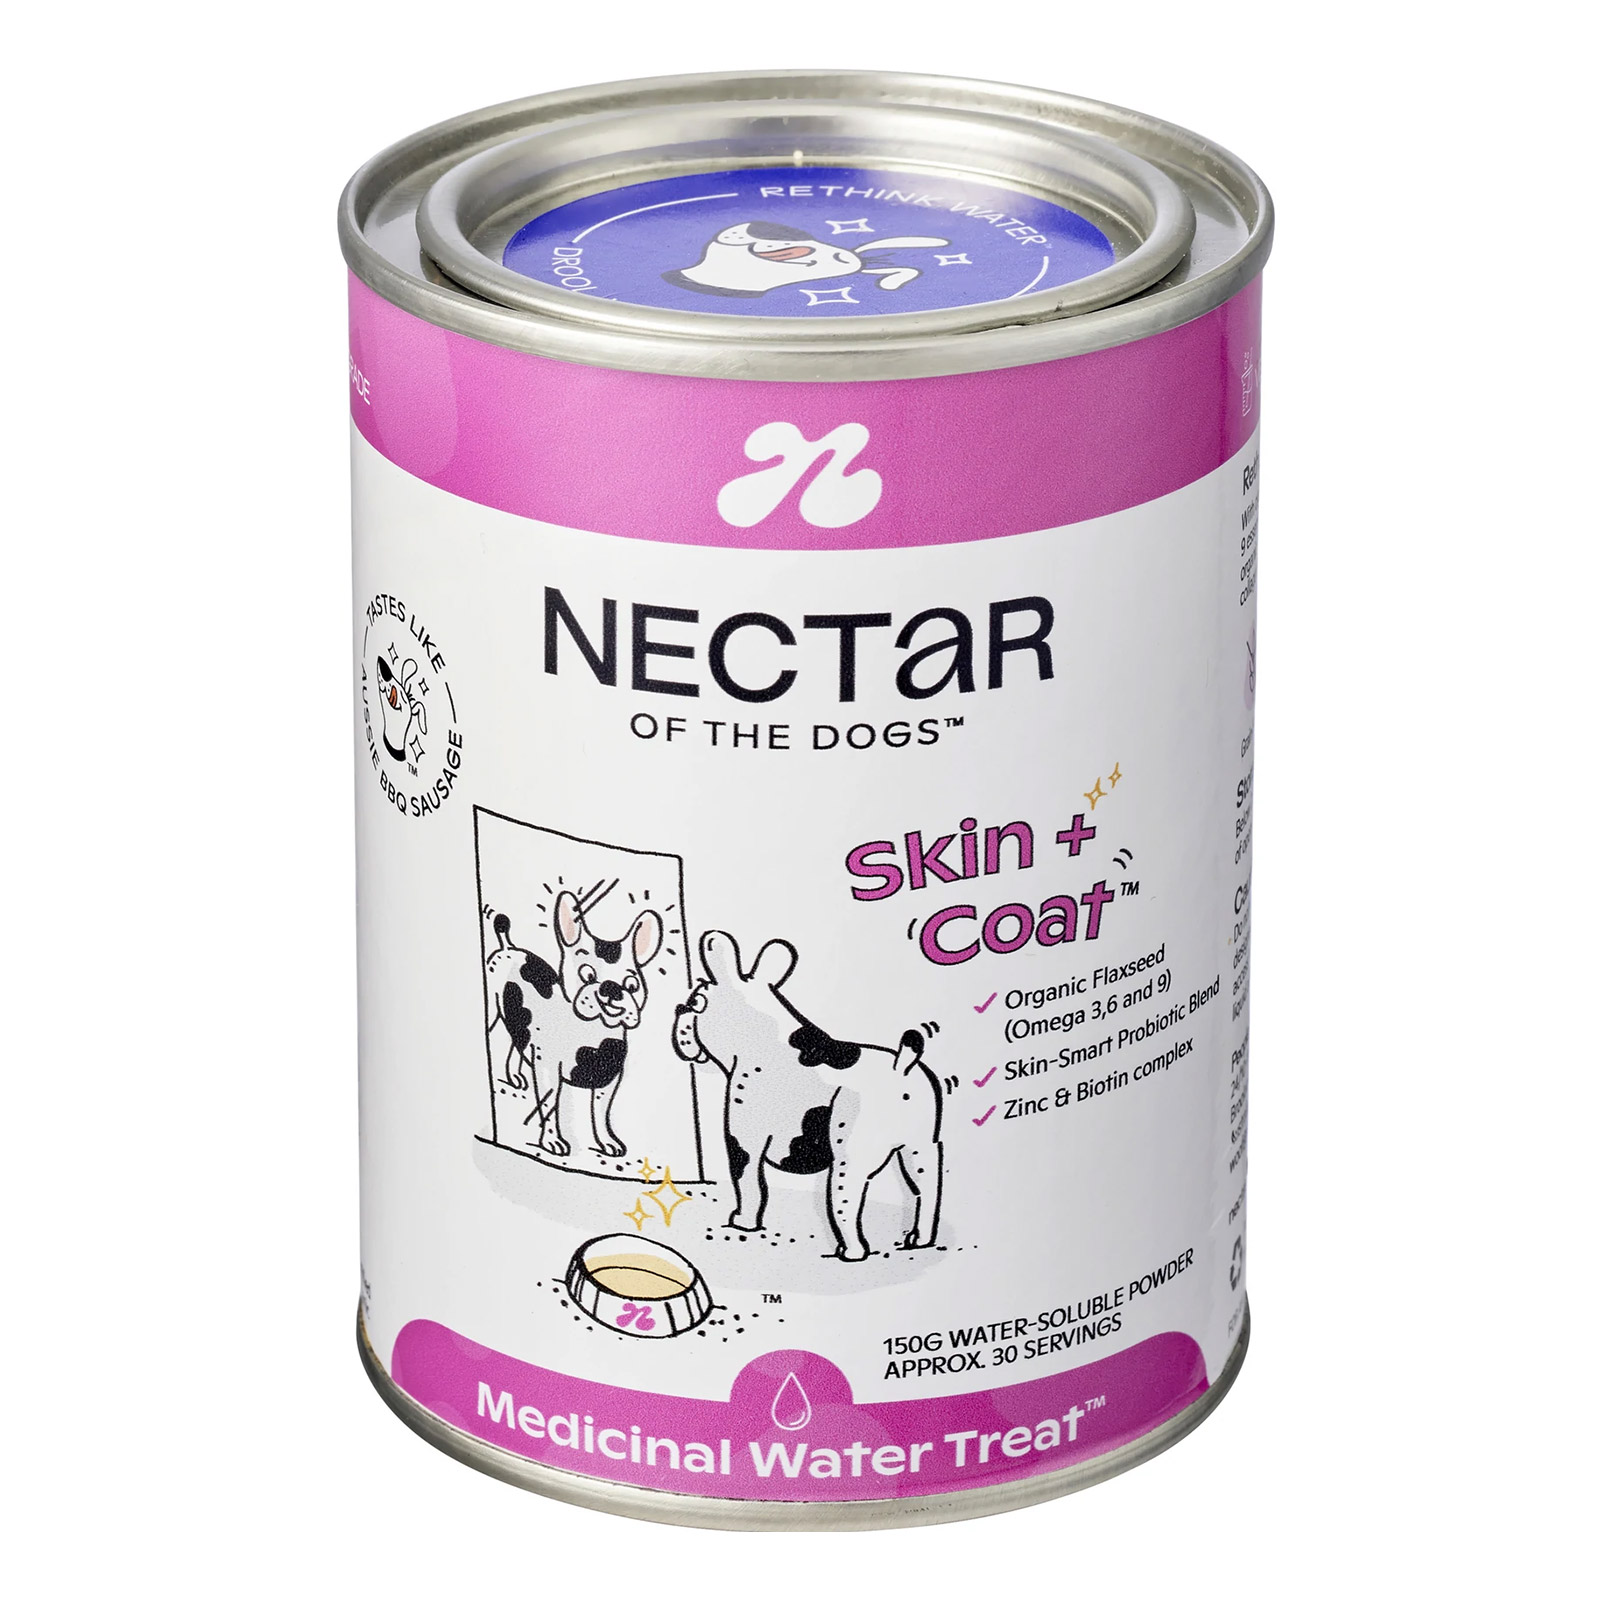 Nectar Skin & Coat Powder for Dogs